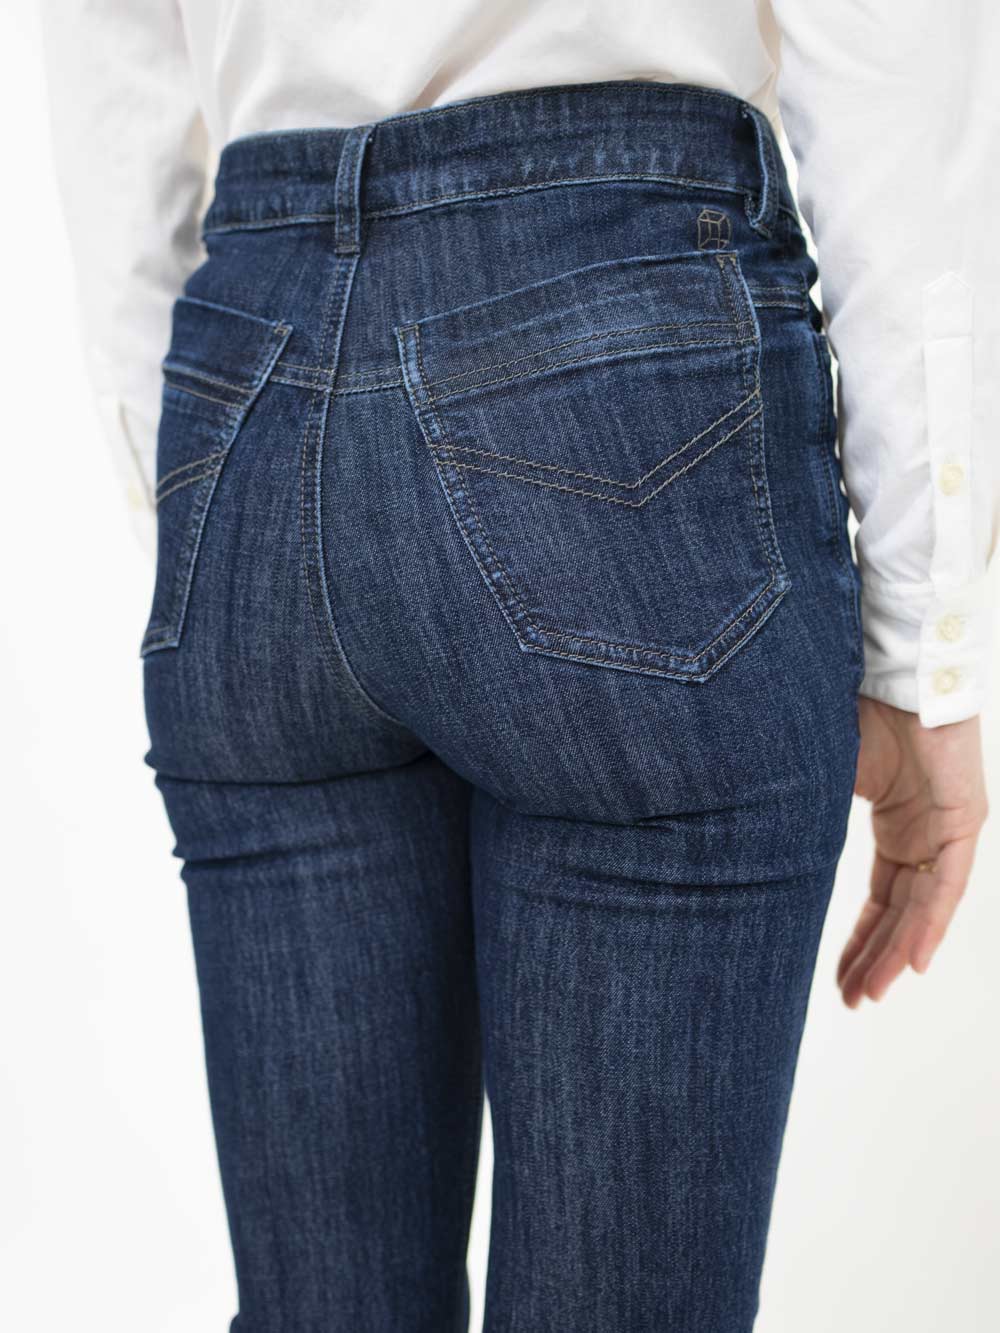 Pick-Pocket Proof® Women's Explorer Travel Jeans - Clothing Arts